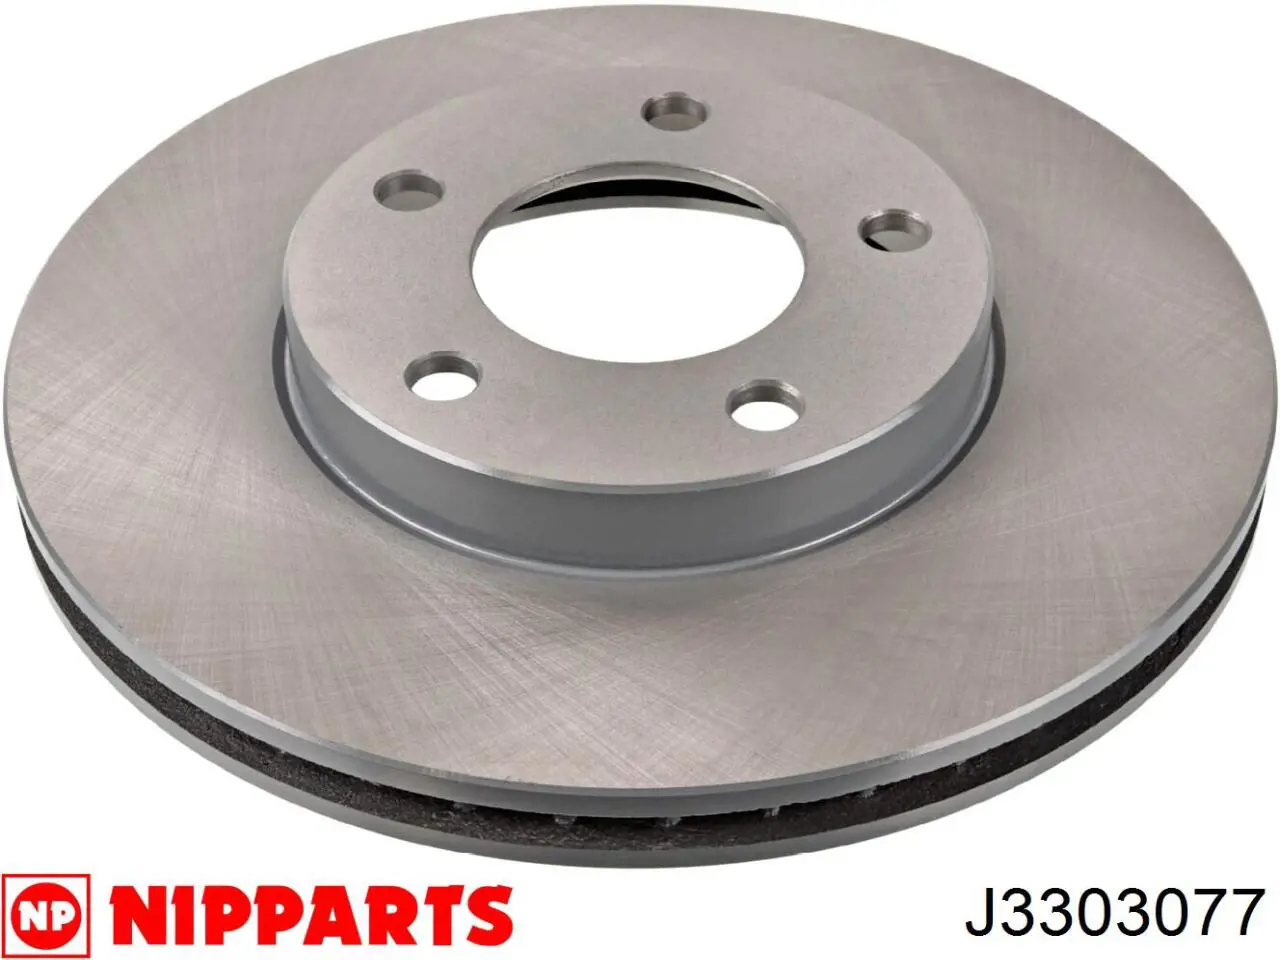 J3303077 Nipparts disco de freno delantero